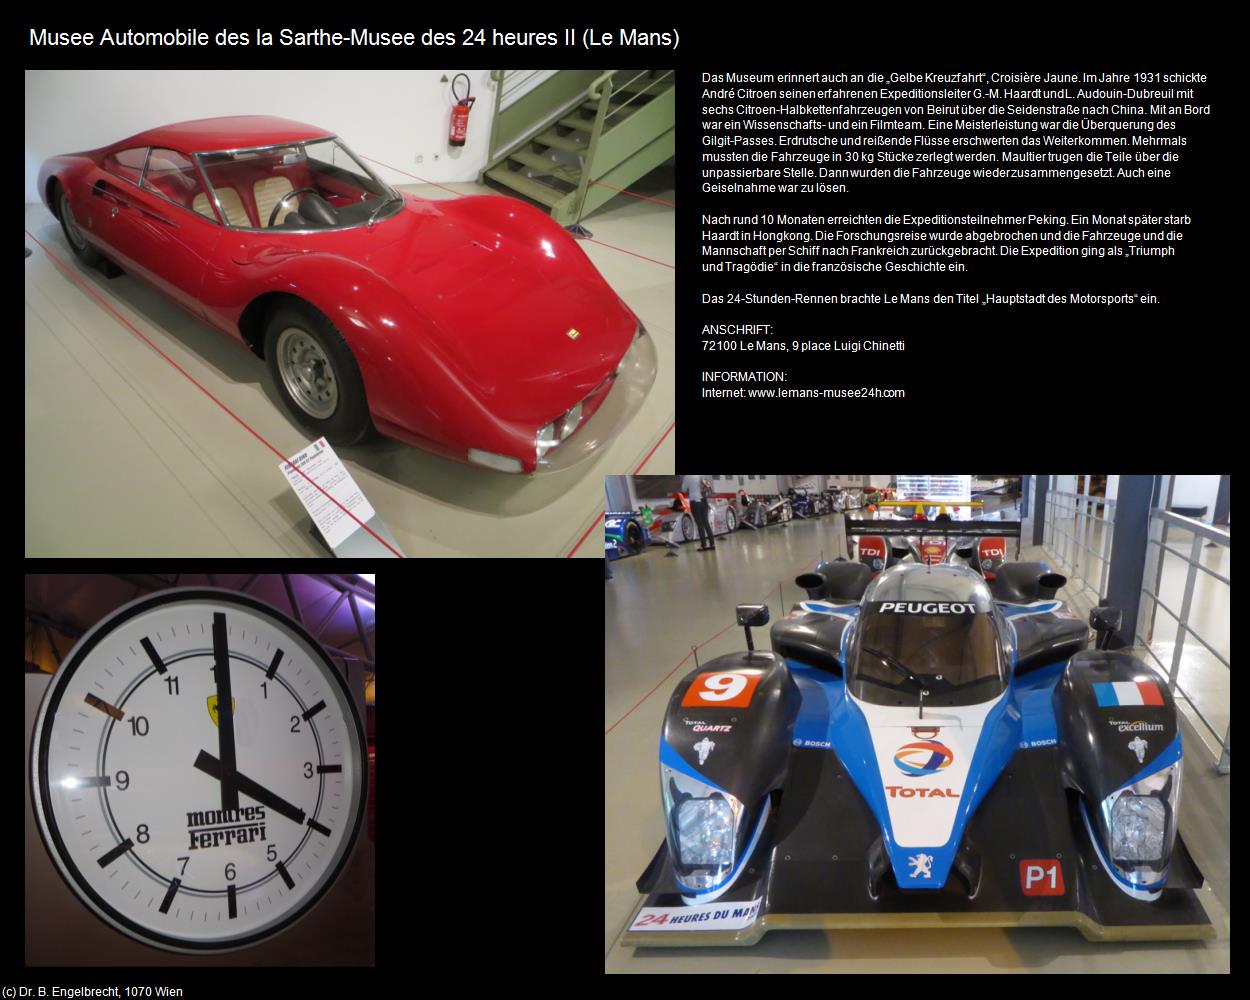 Musee Automobile des la Sarthe-Musee des 24 heures II (Le Mans (FR-PDL)) in Kulturatlas-FRANKREICH